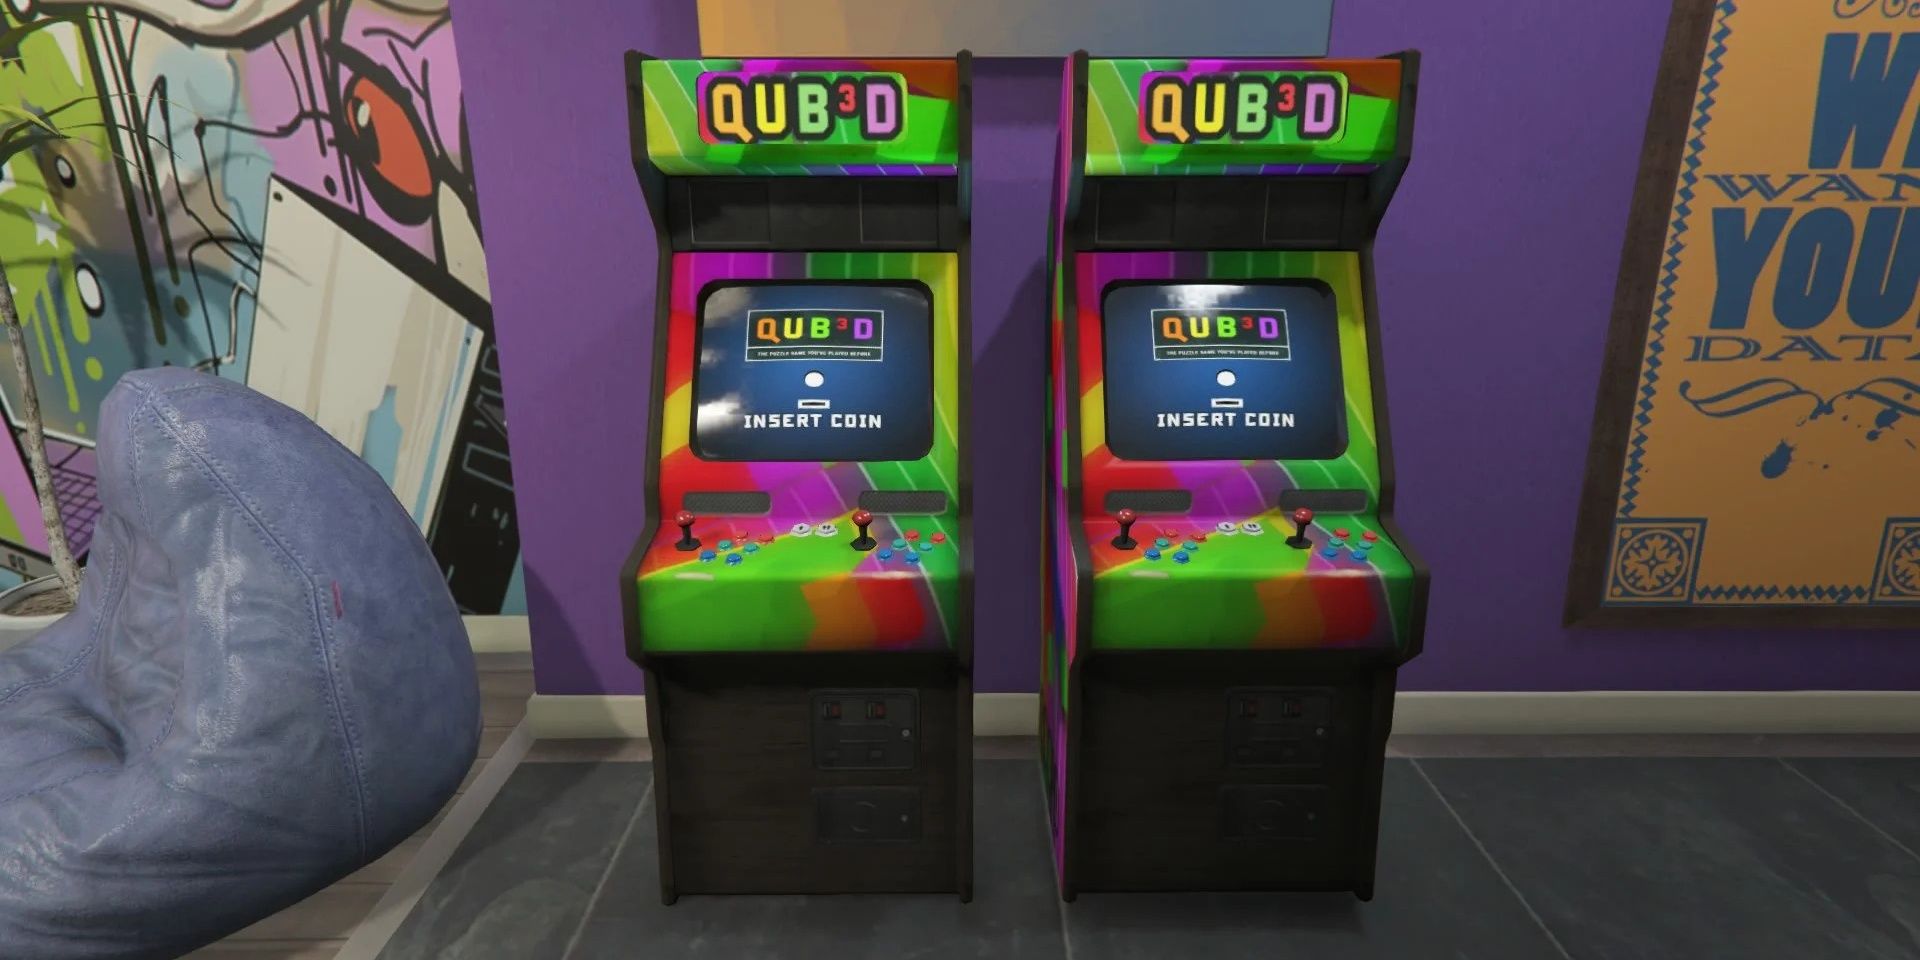 Qub3d arcade games in GTA V